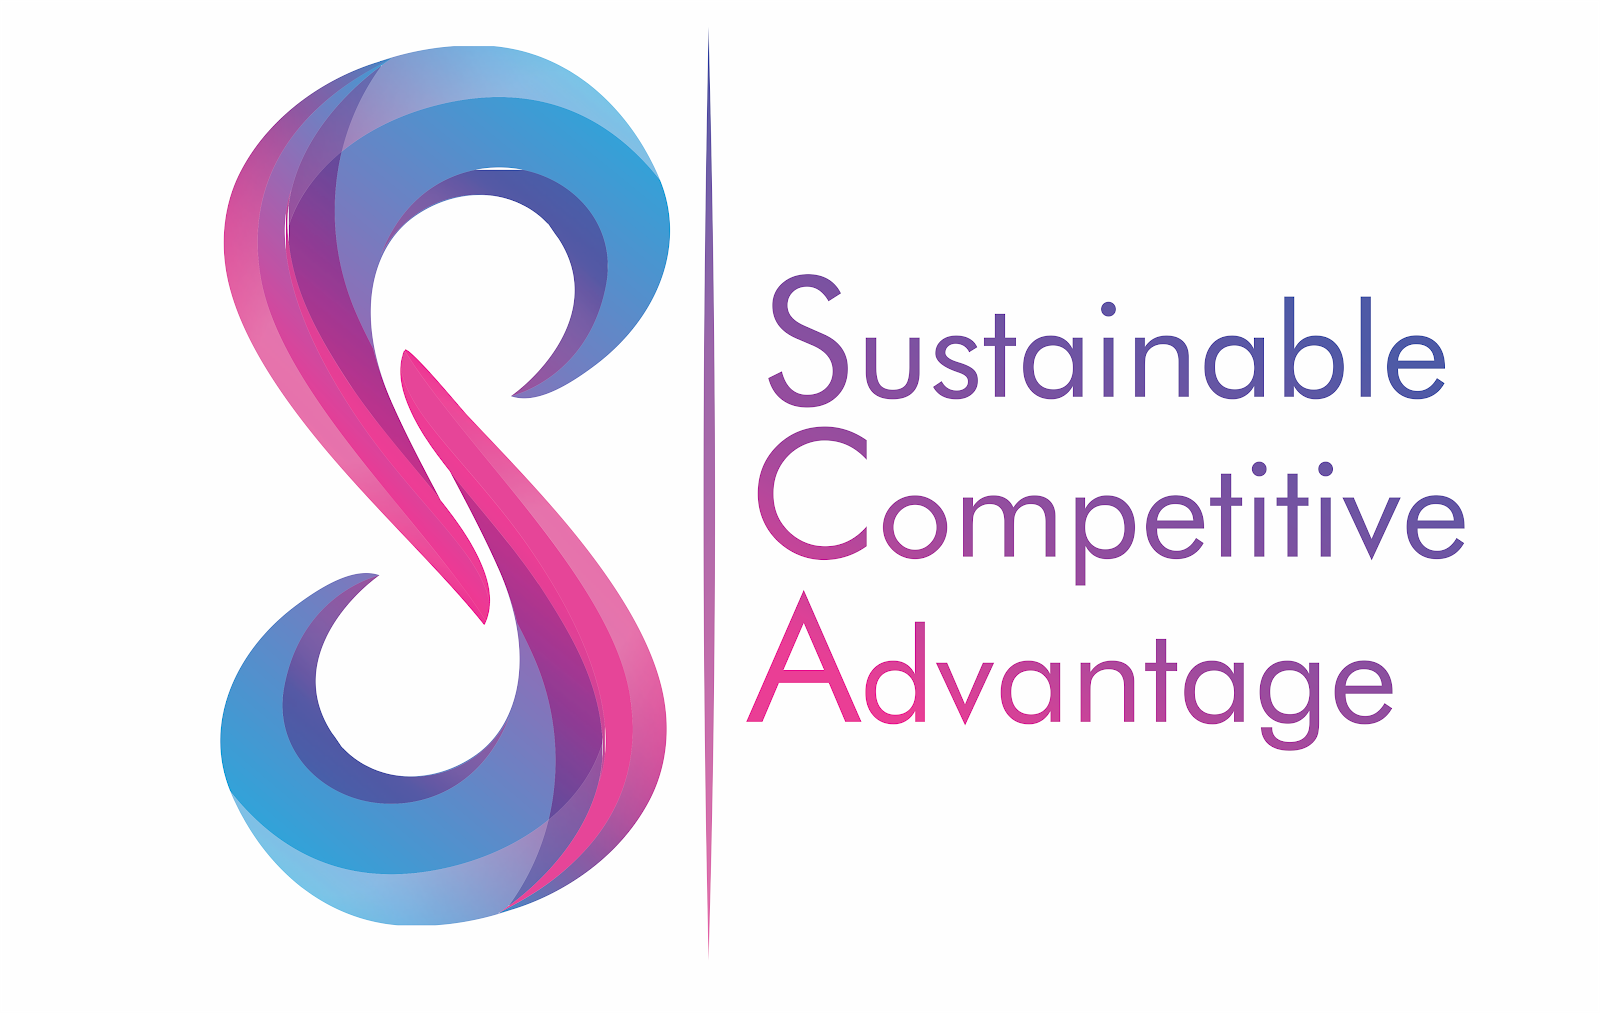 Sustainable competitive advantage. Advantage marketing